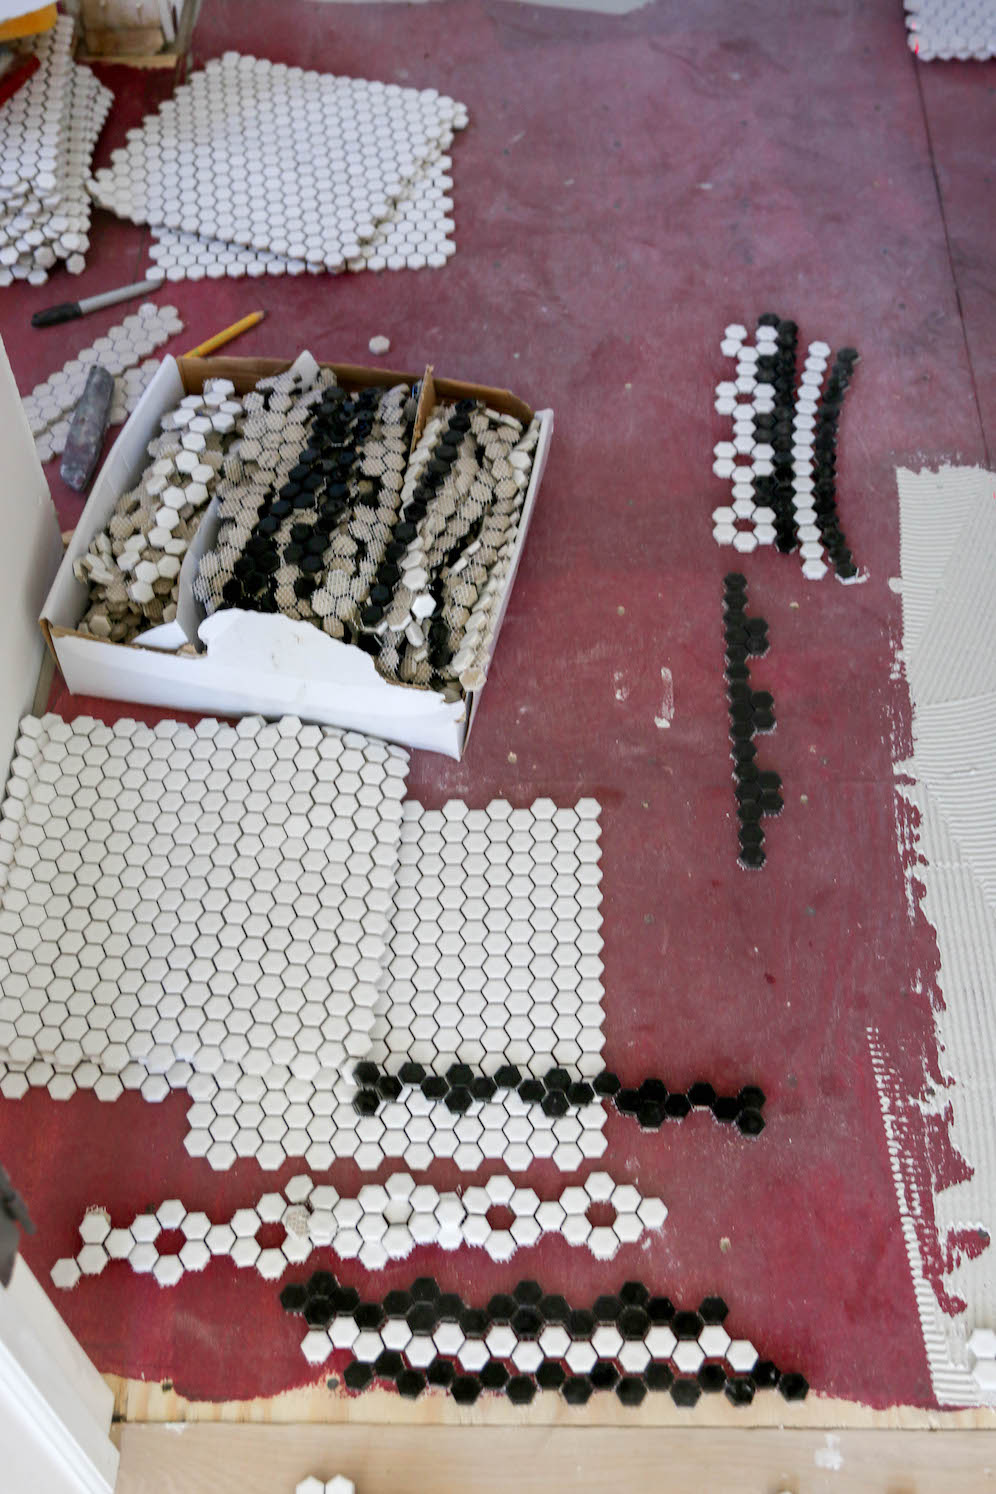 6" Victorian styled honeycomb tile The Coastal Confidence Aubrey Yandow